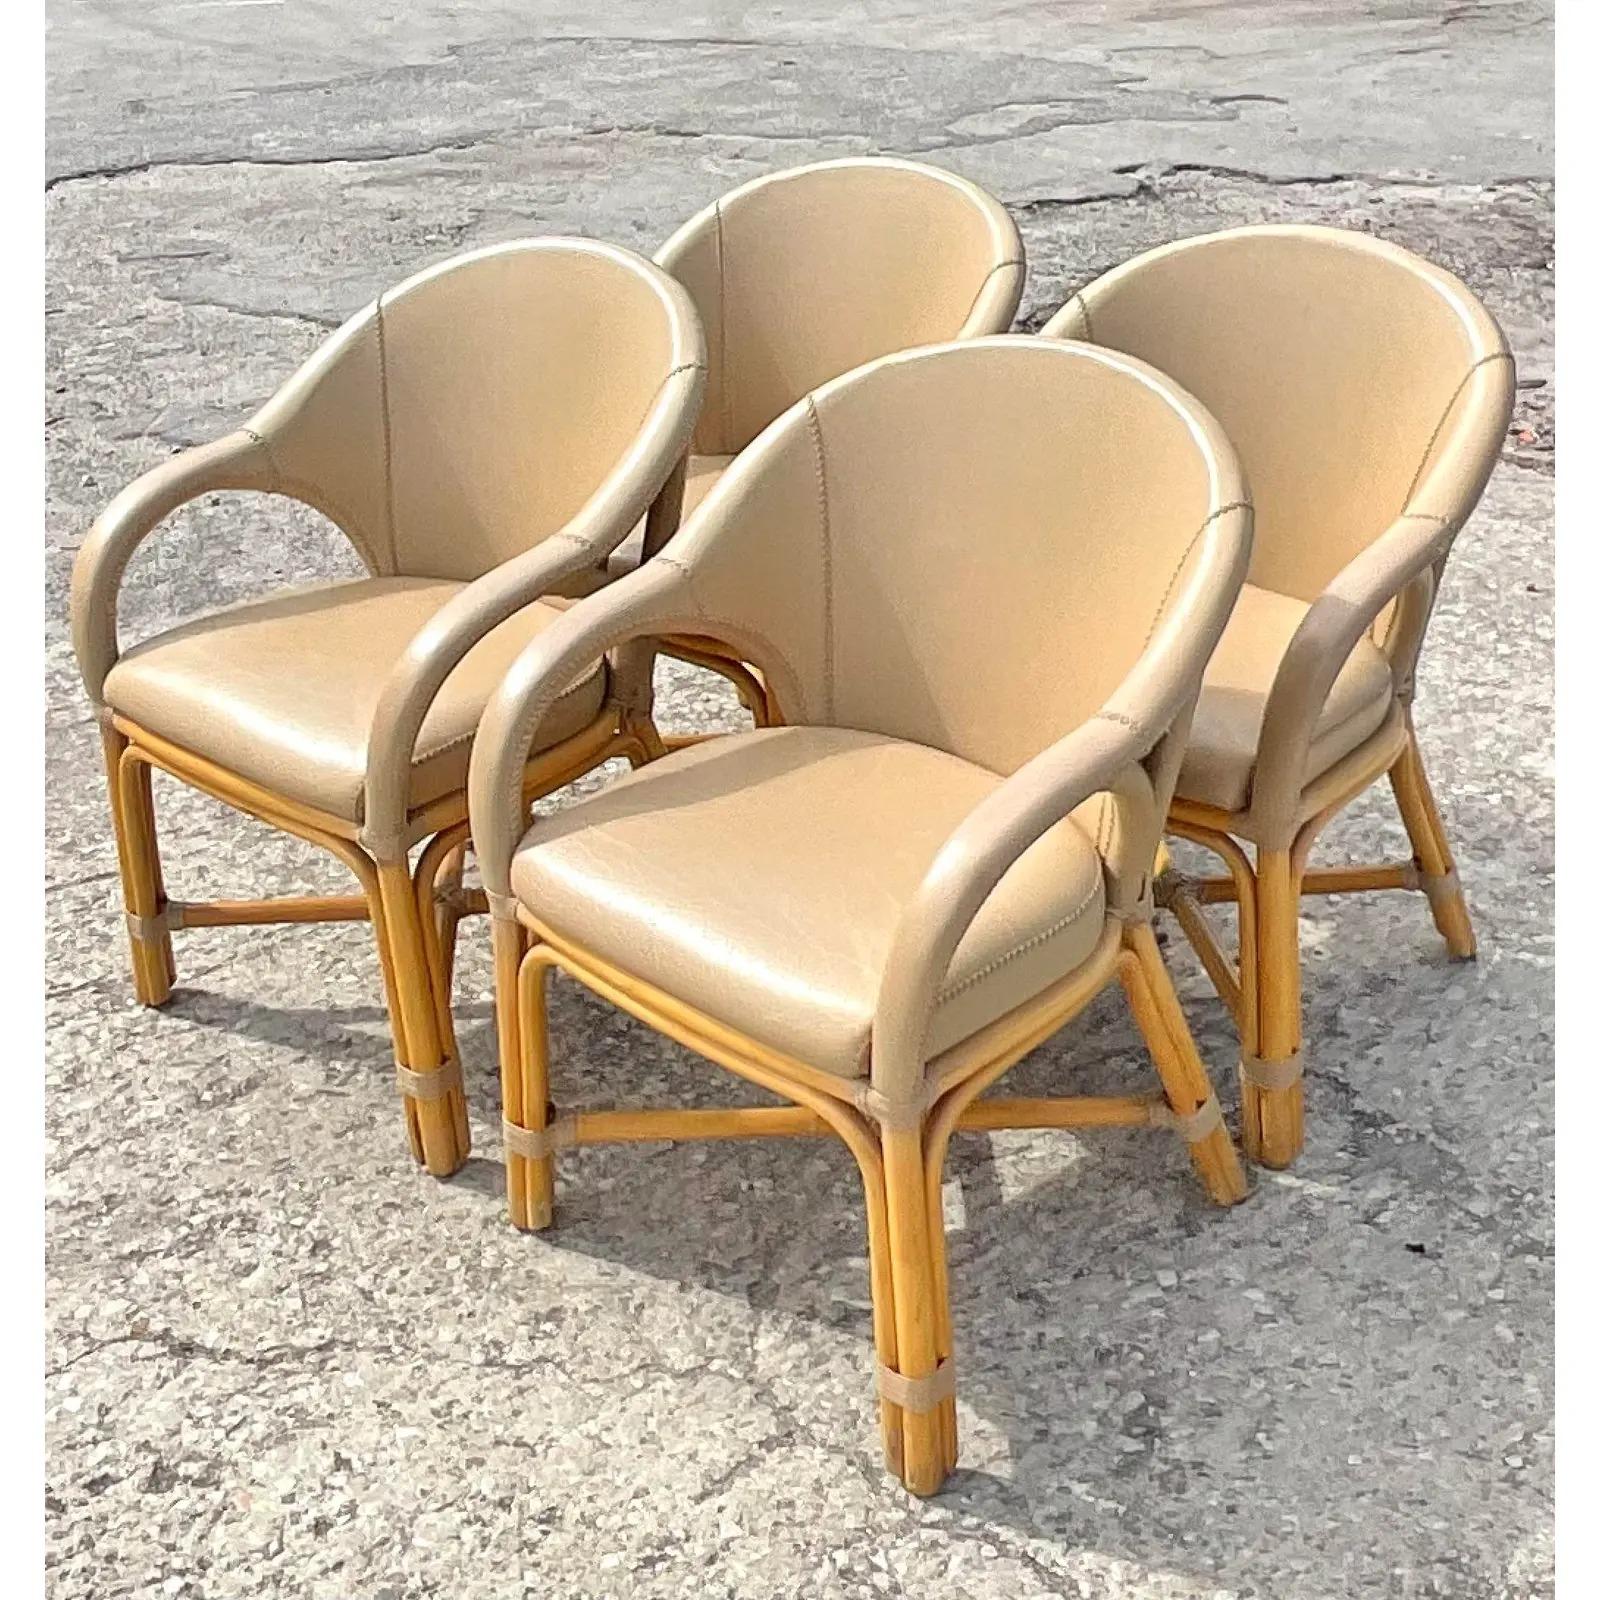 20th Century Vintage Coastal Antonio Budji Leather and Rattan Dining Chairs, Set of 4